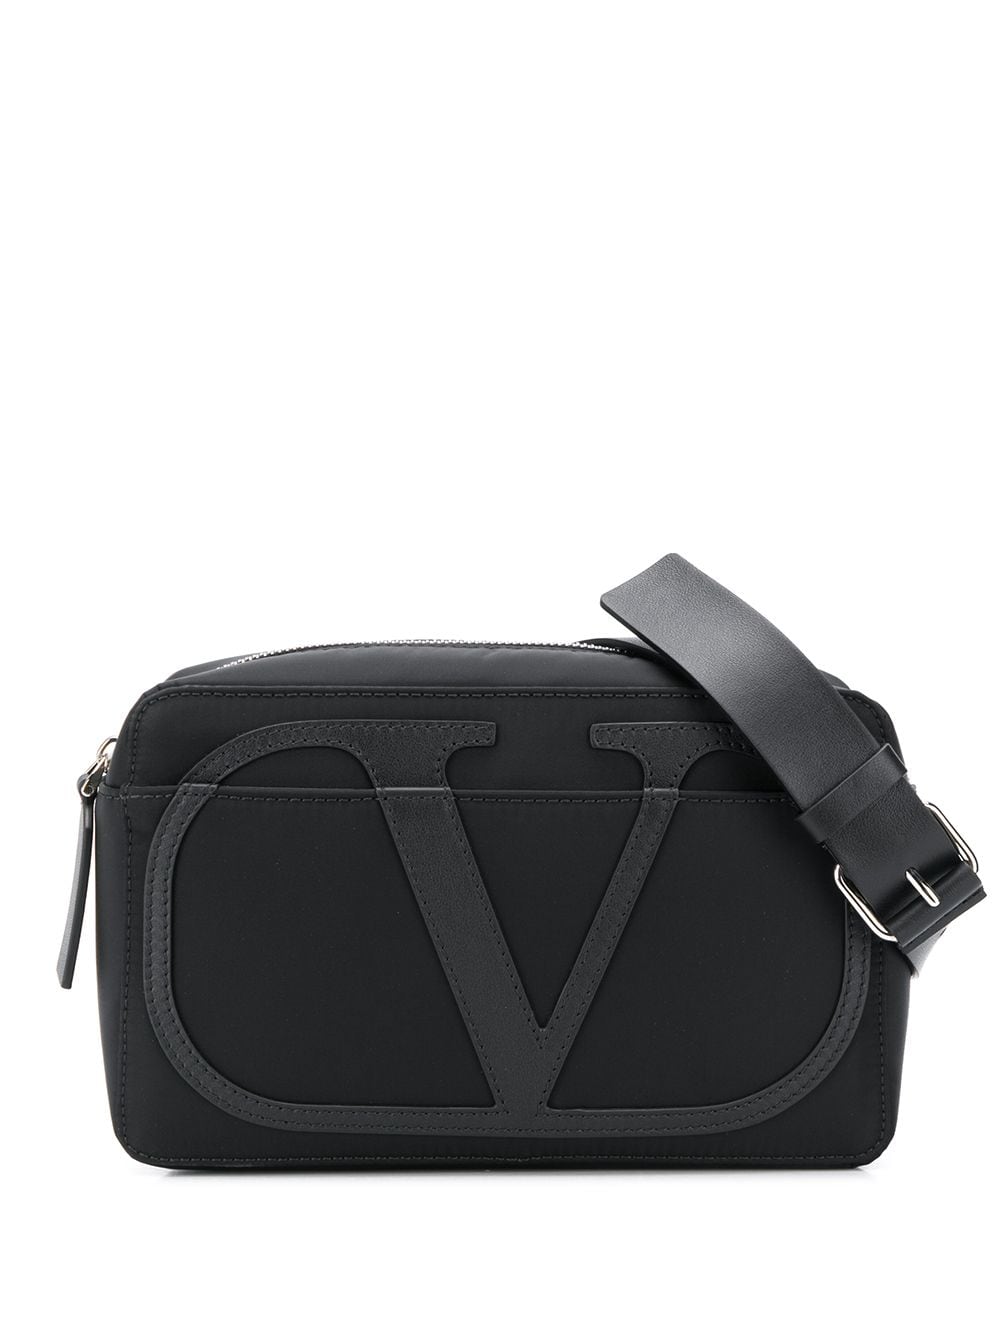 фото Valentino поясная сумка с логотипом VLogo